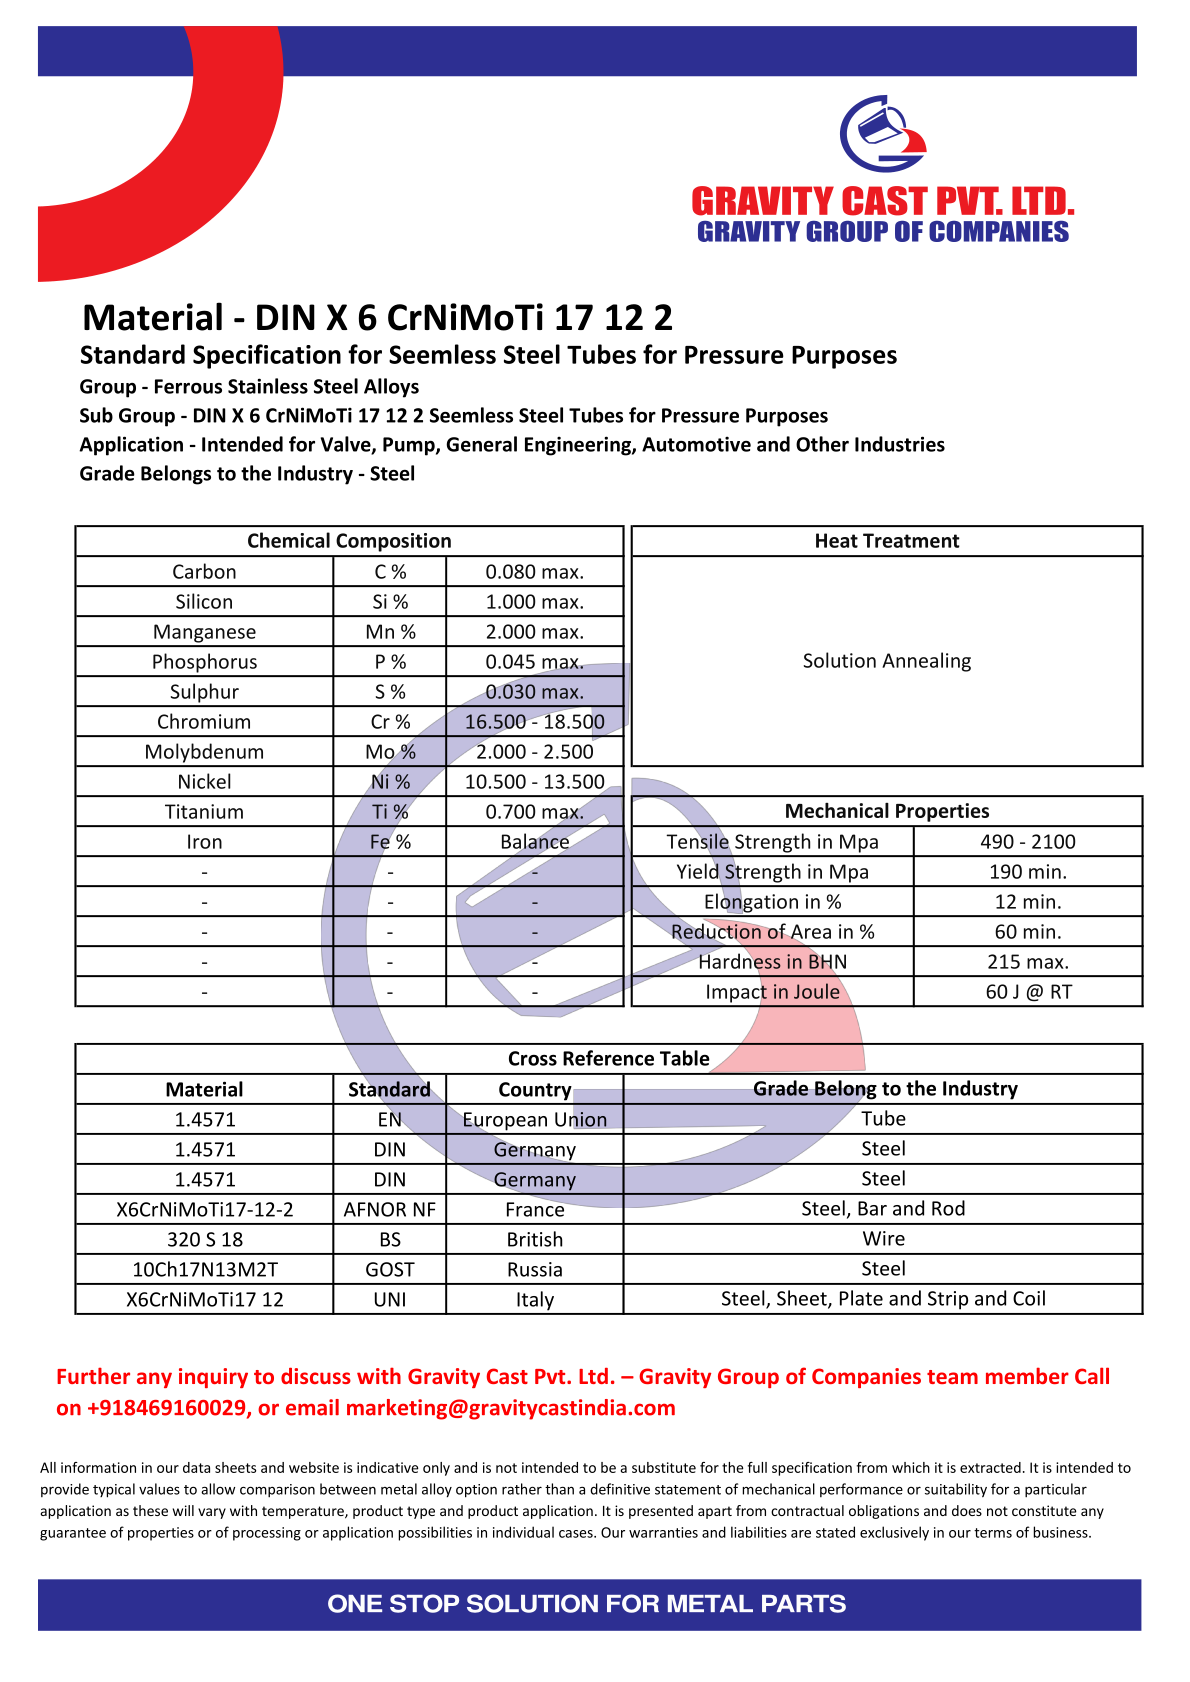 DIN X 6 CrNiMoTi 17 12 2.pdf